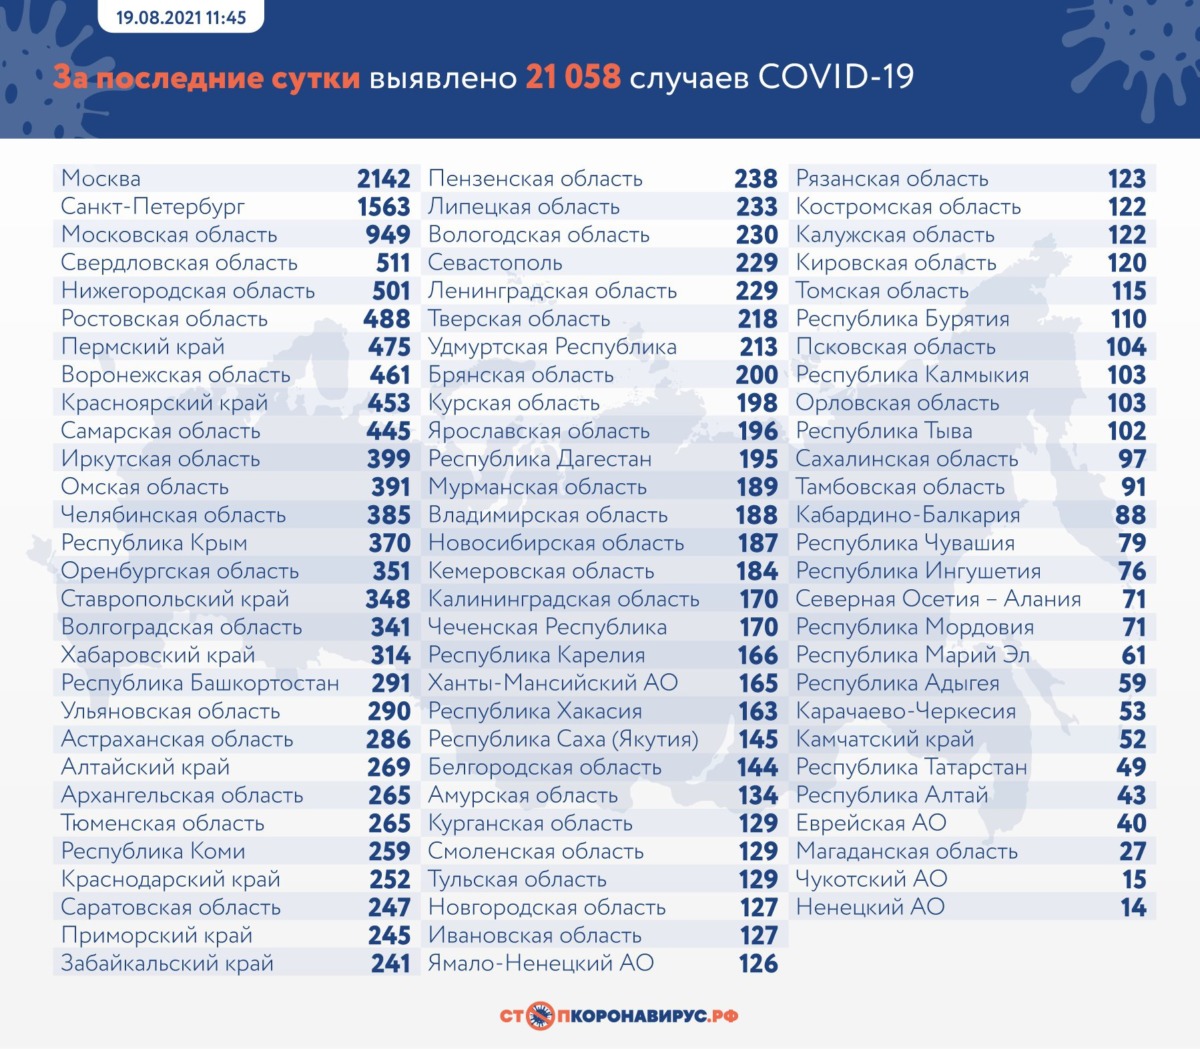 Статистика коронавируса в России на 19 августа